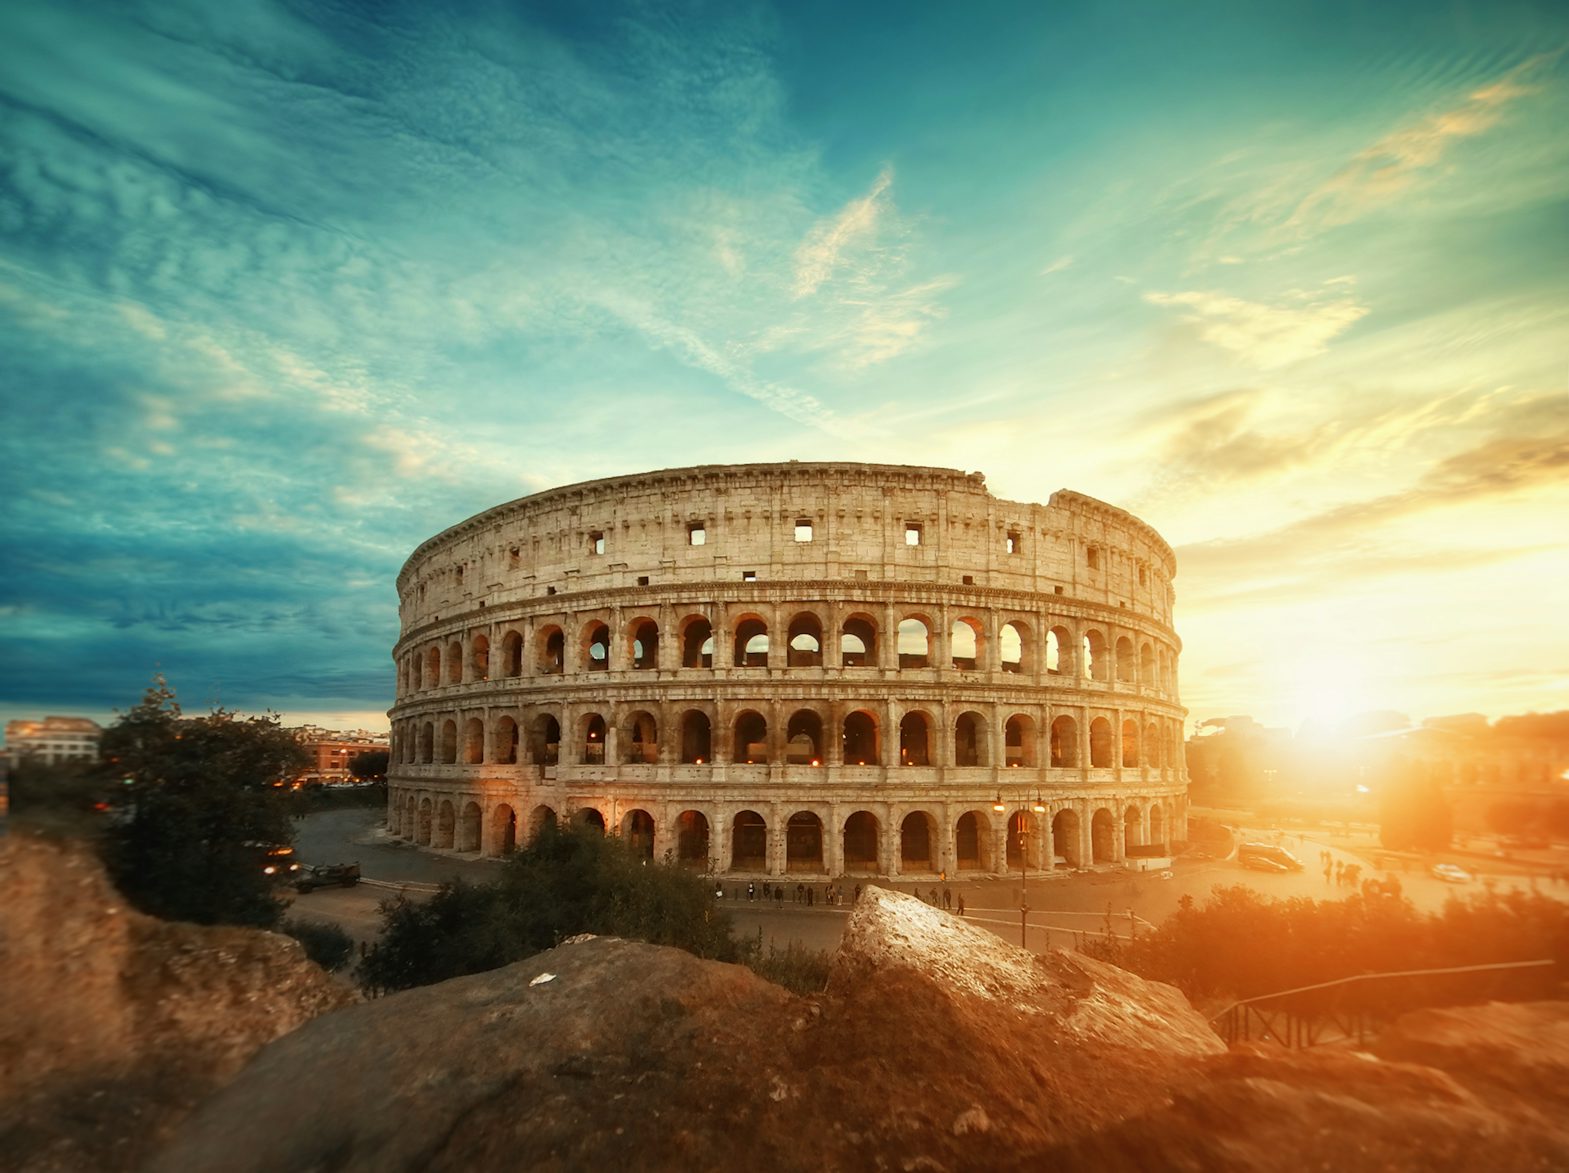 Colosseum, Rome | Willian West on Unsplash